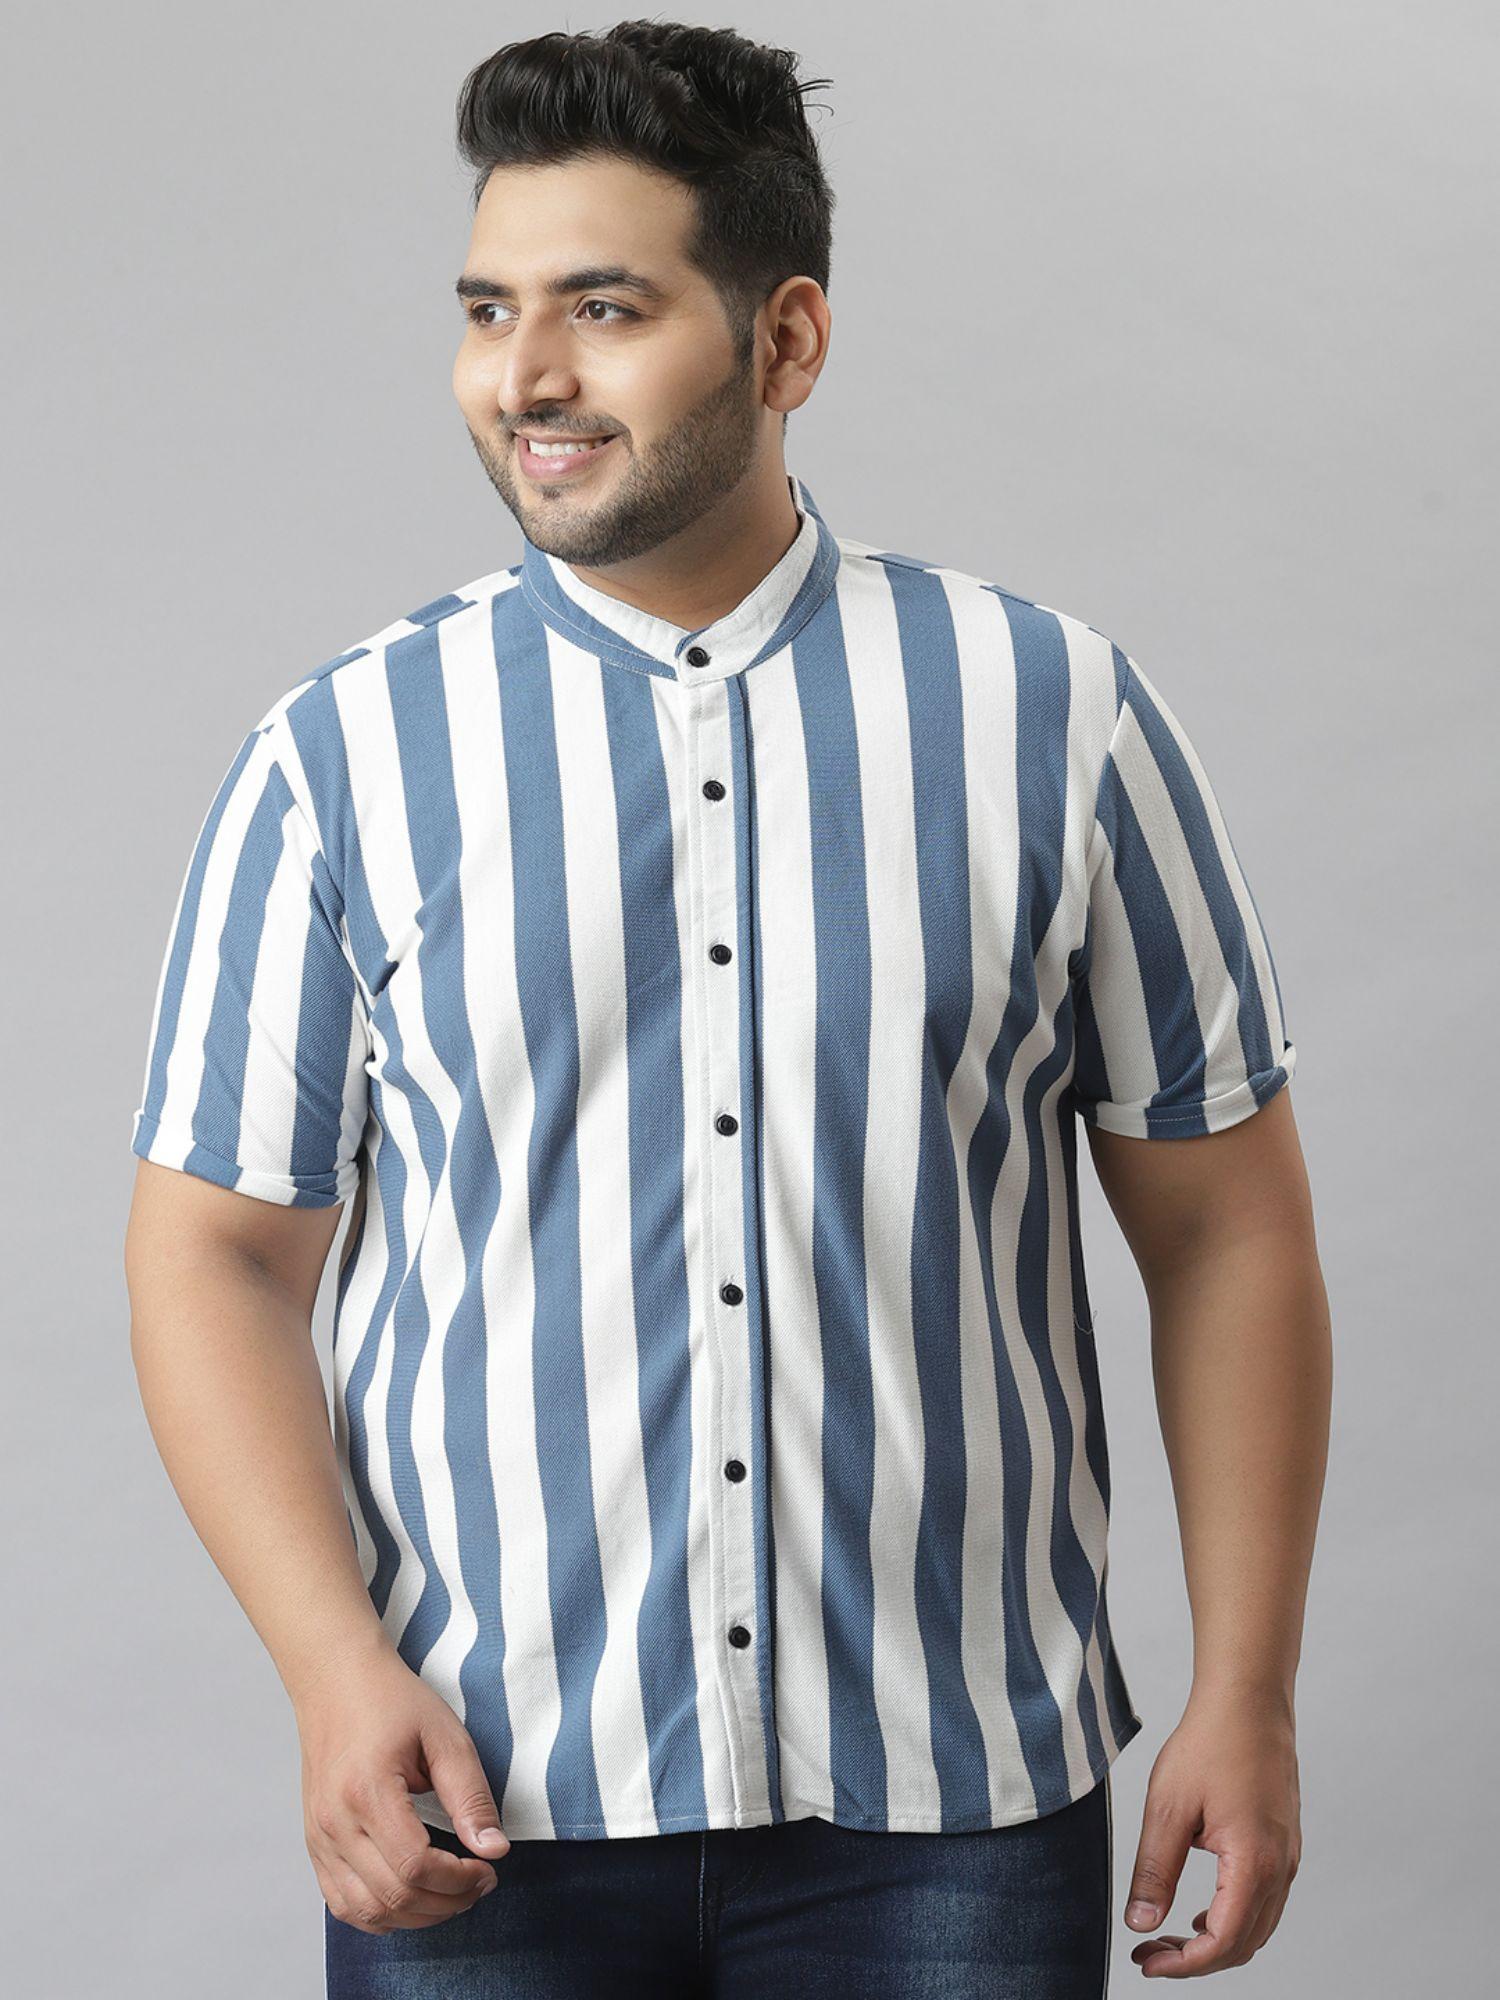 men's striped stylish casual shirts,multi-color